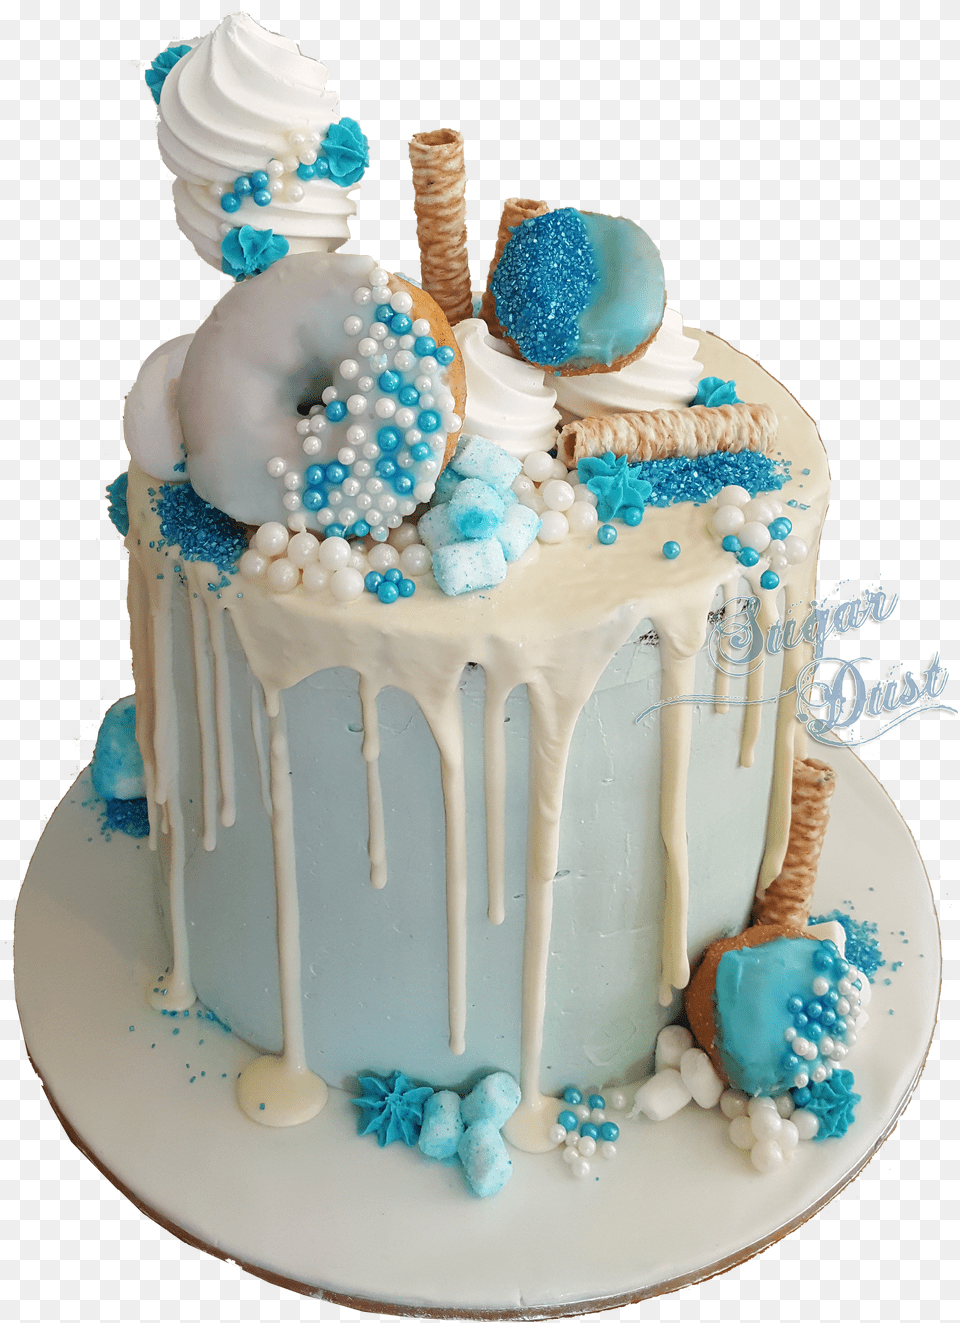 Cake Decorating Png Image